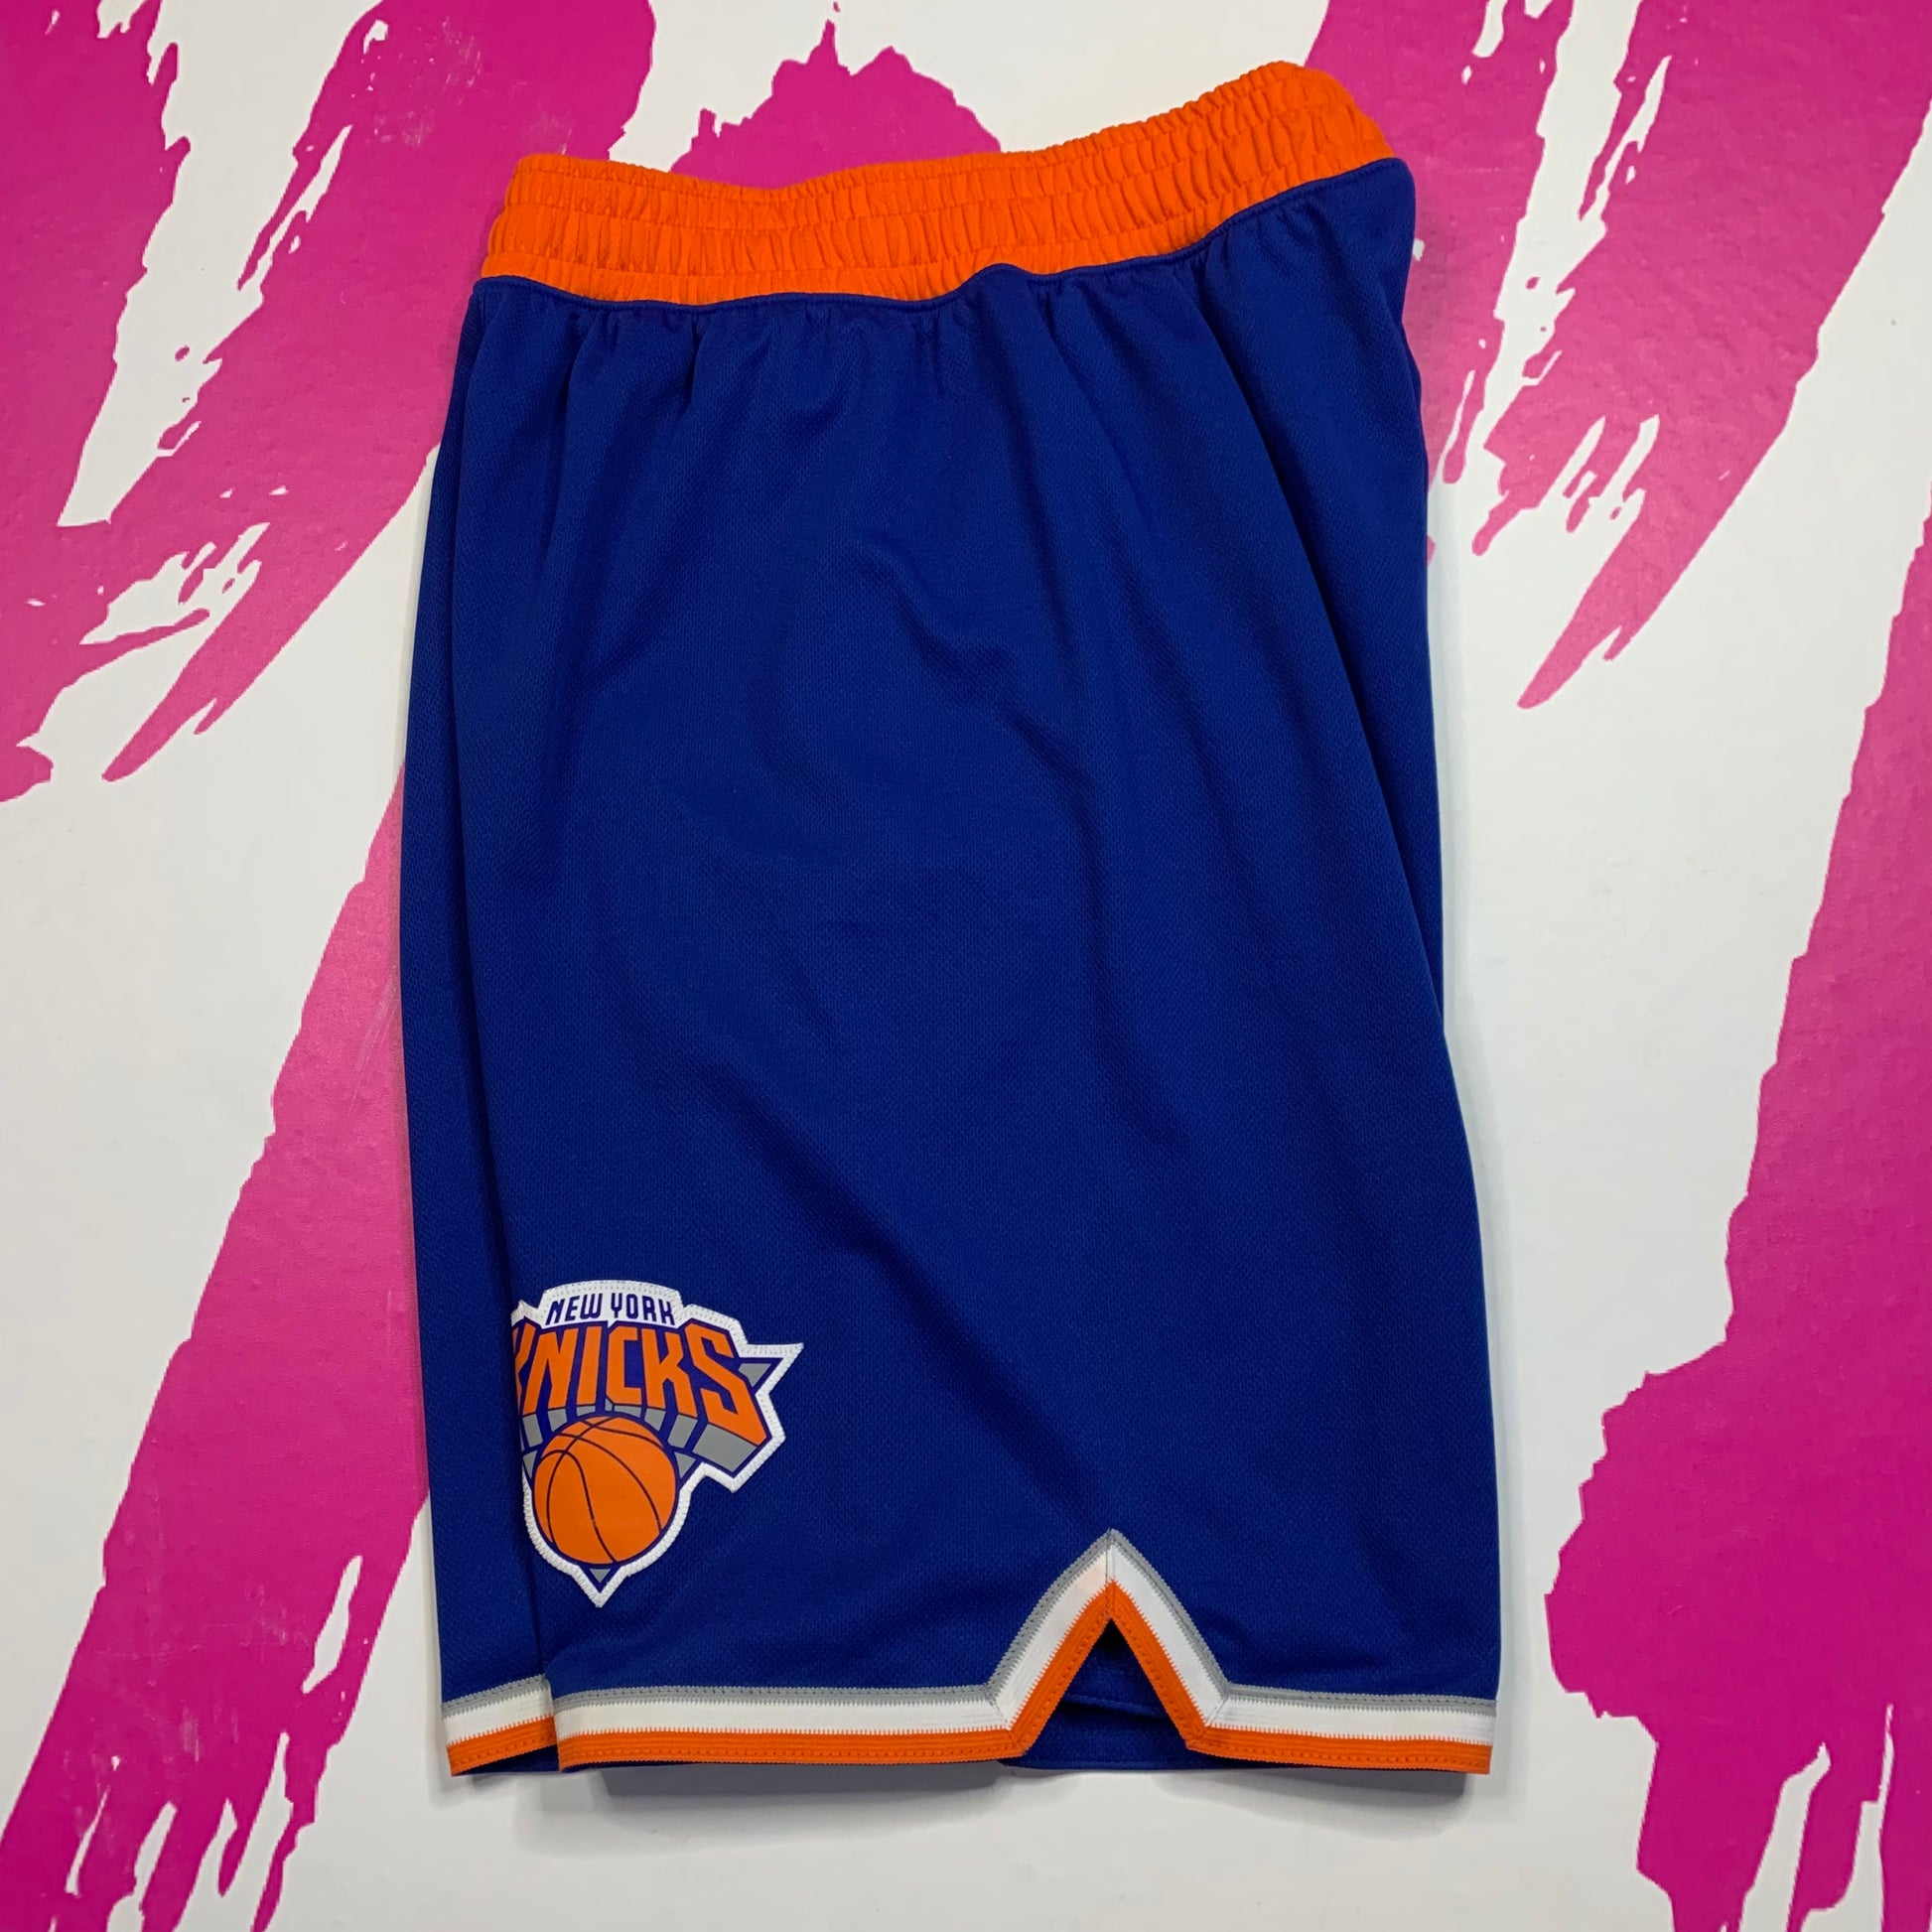 New York Knicks New Youth Royal Replica Basketball Shorts By Adidas